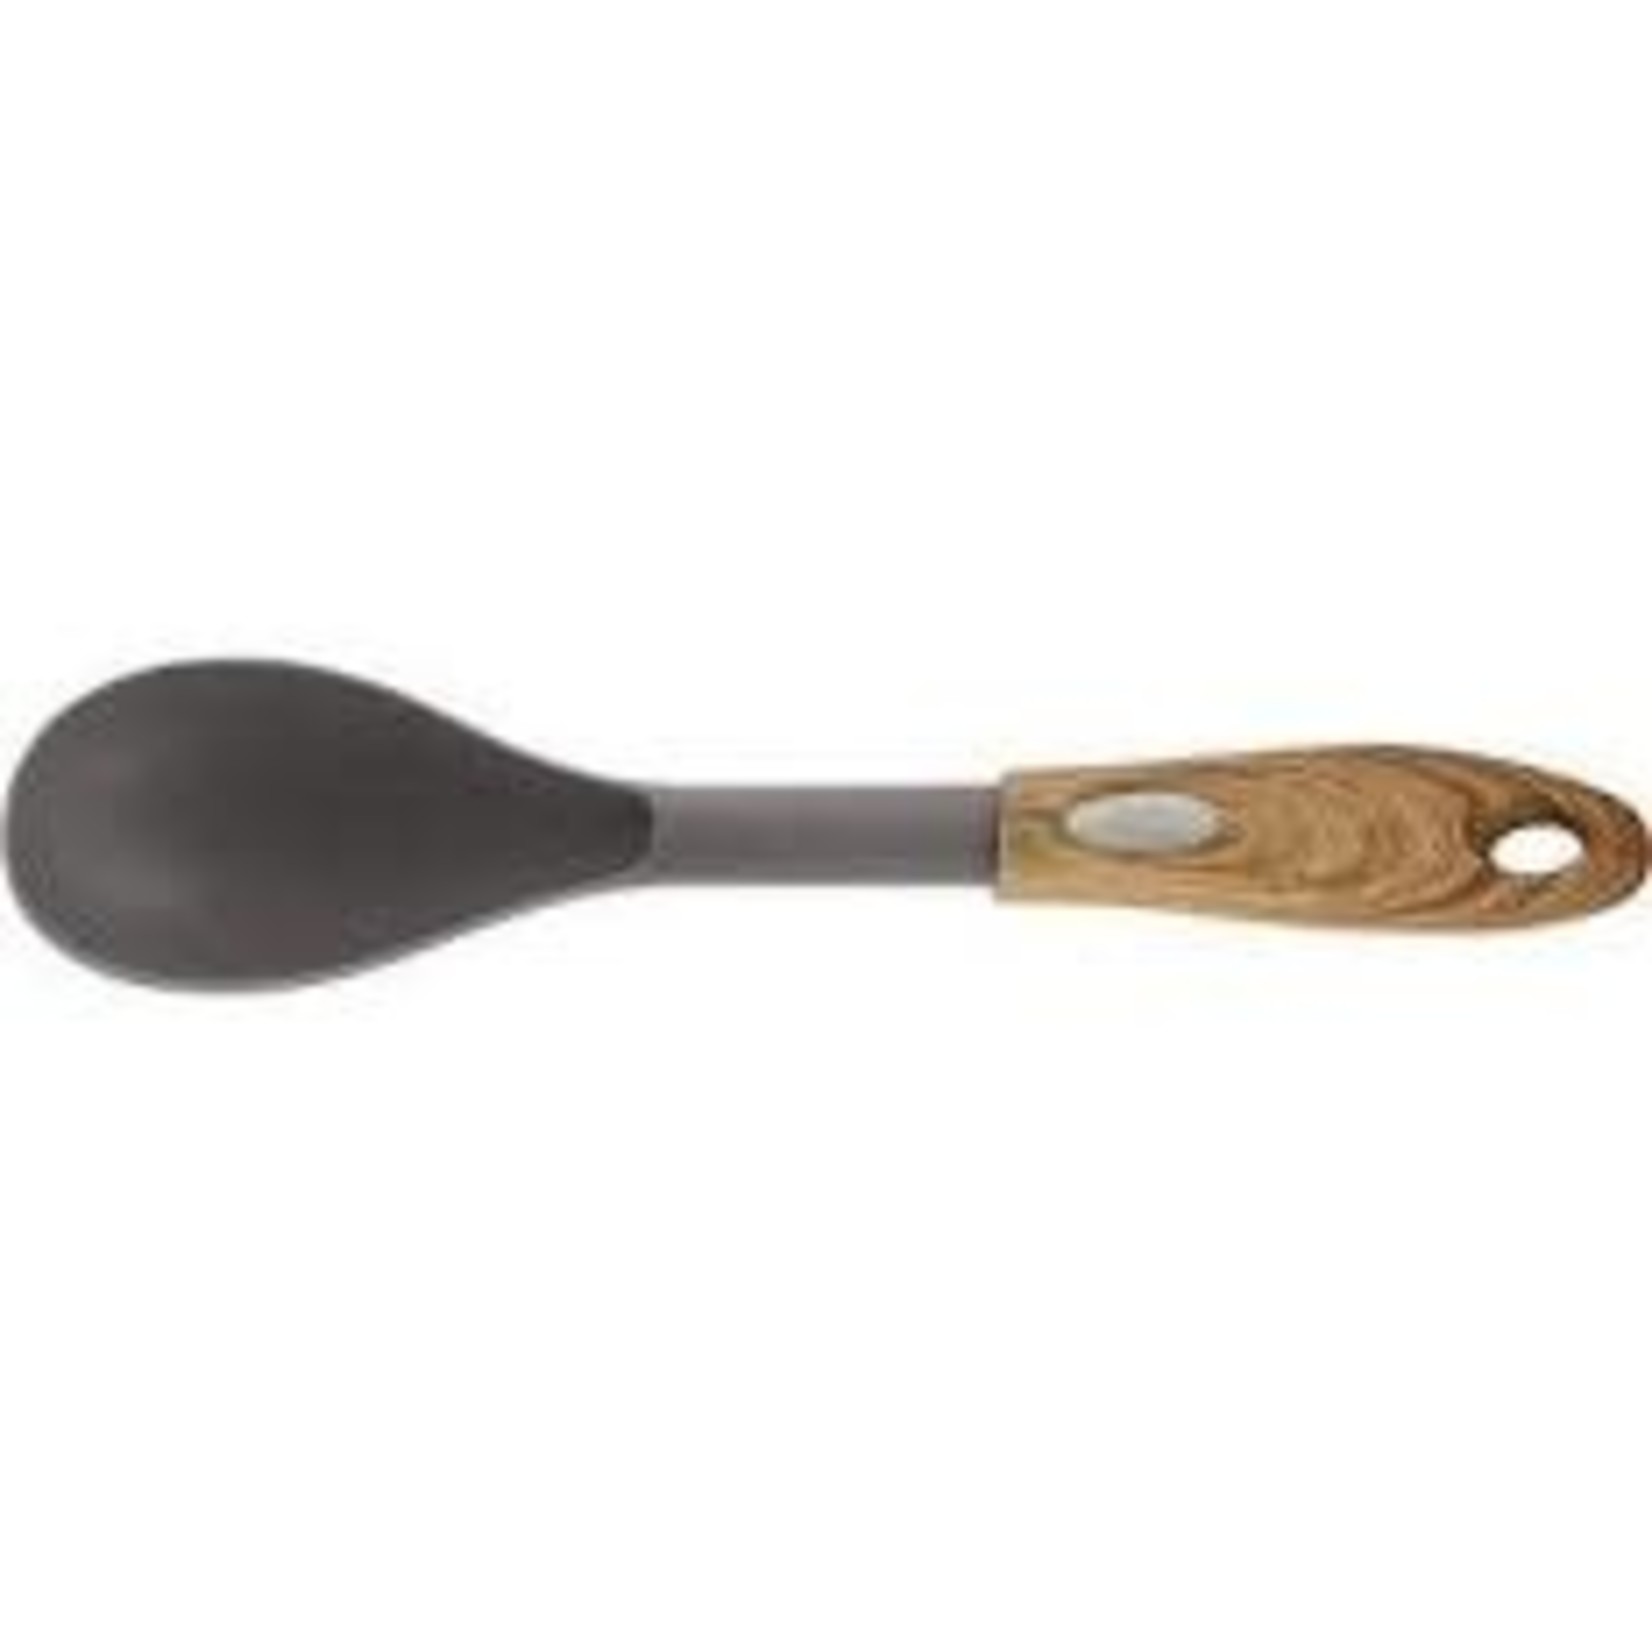 https://cdn.shoplightspeed.com/shops/627977/files/42822103/1652x1652x2/robinson-home-products-nylon-basting-spoon.jpg